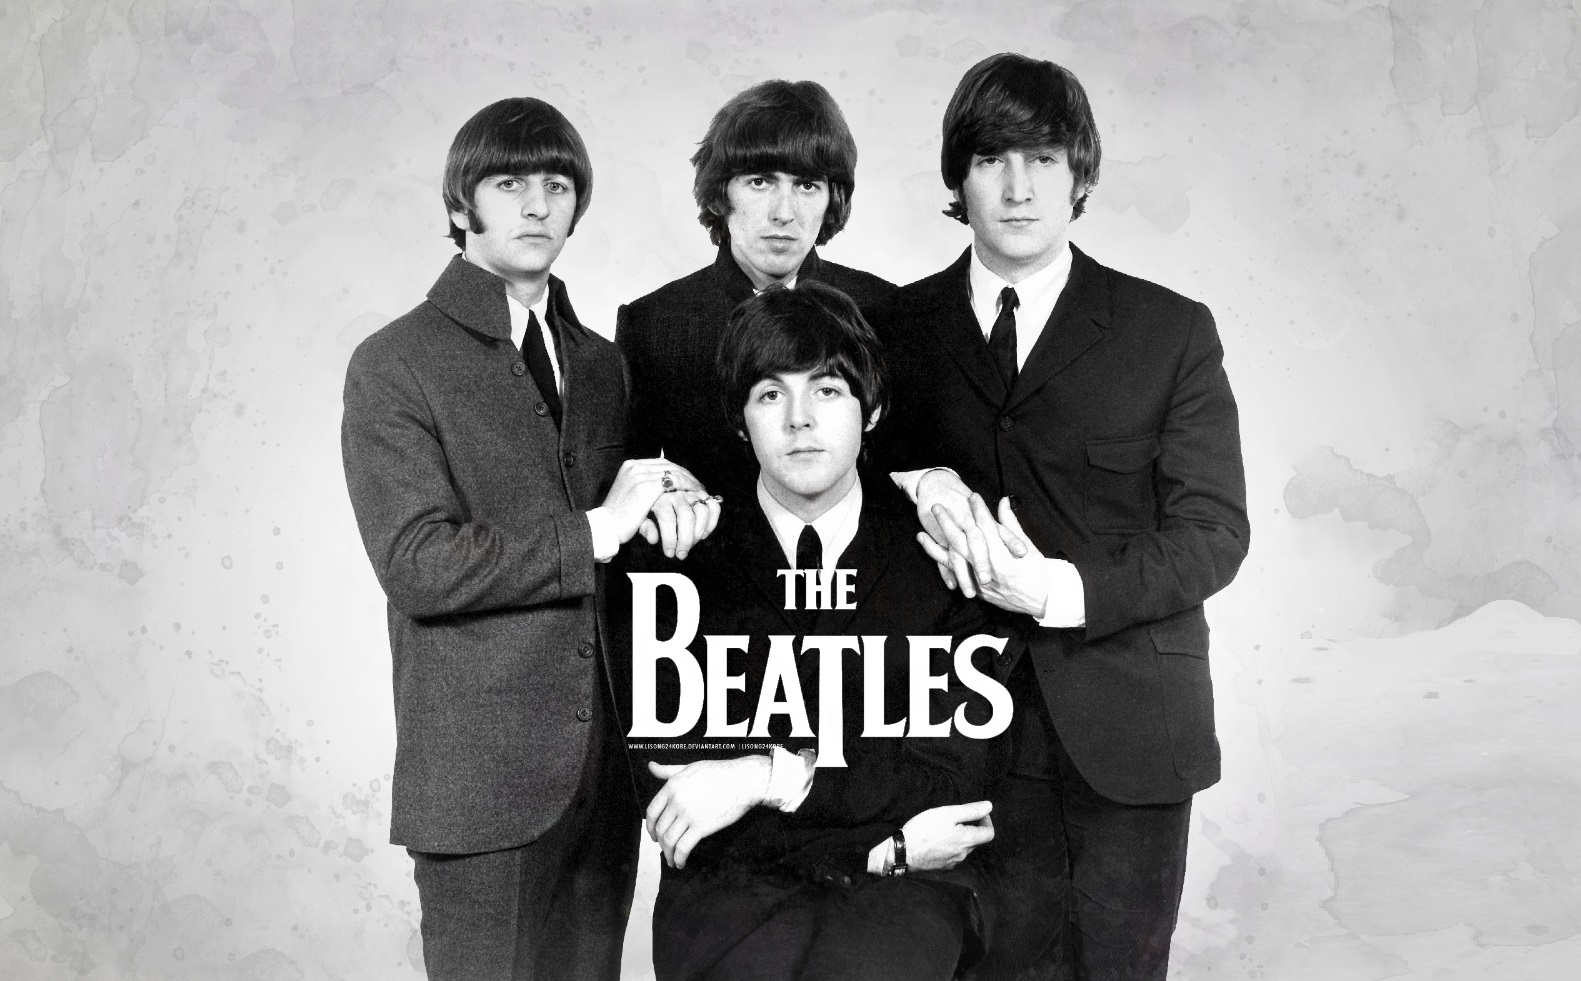 Os Beatles, Com os integrantes John Lennon, Paul McCartney, George Harrison e Ringo Starr